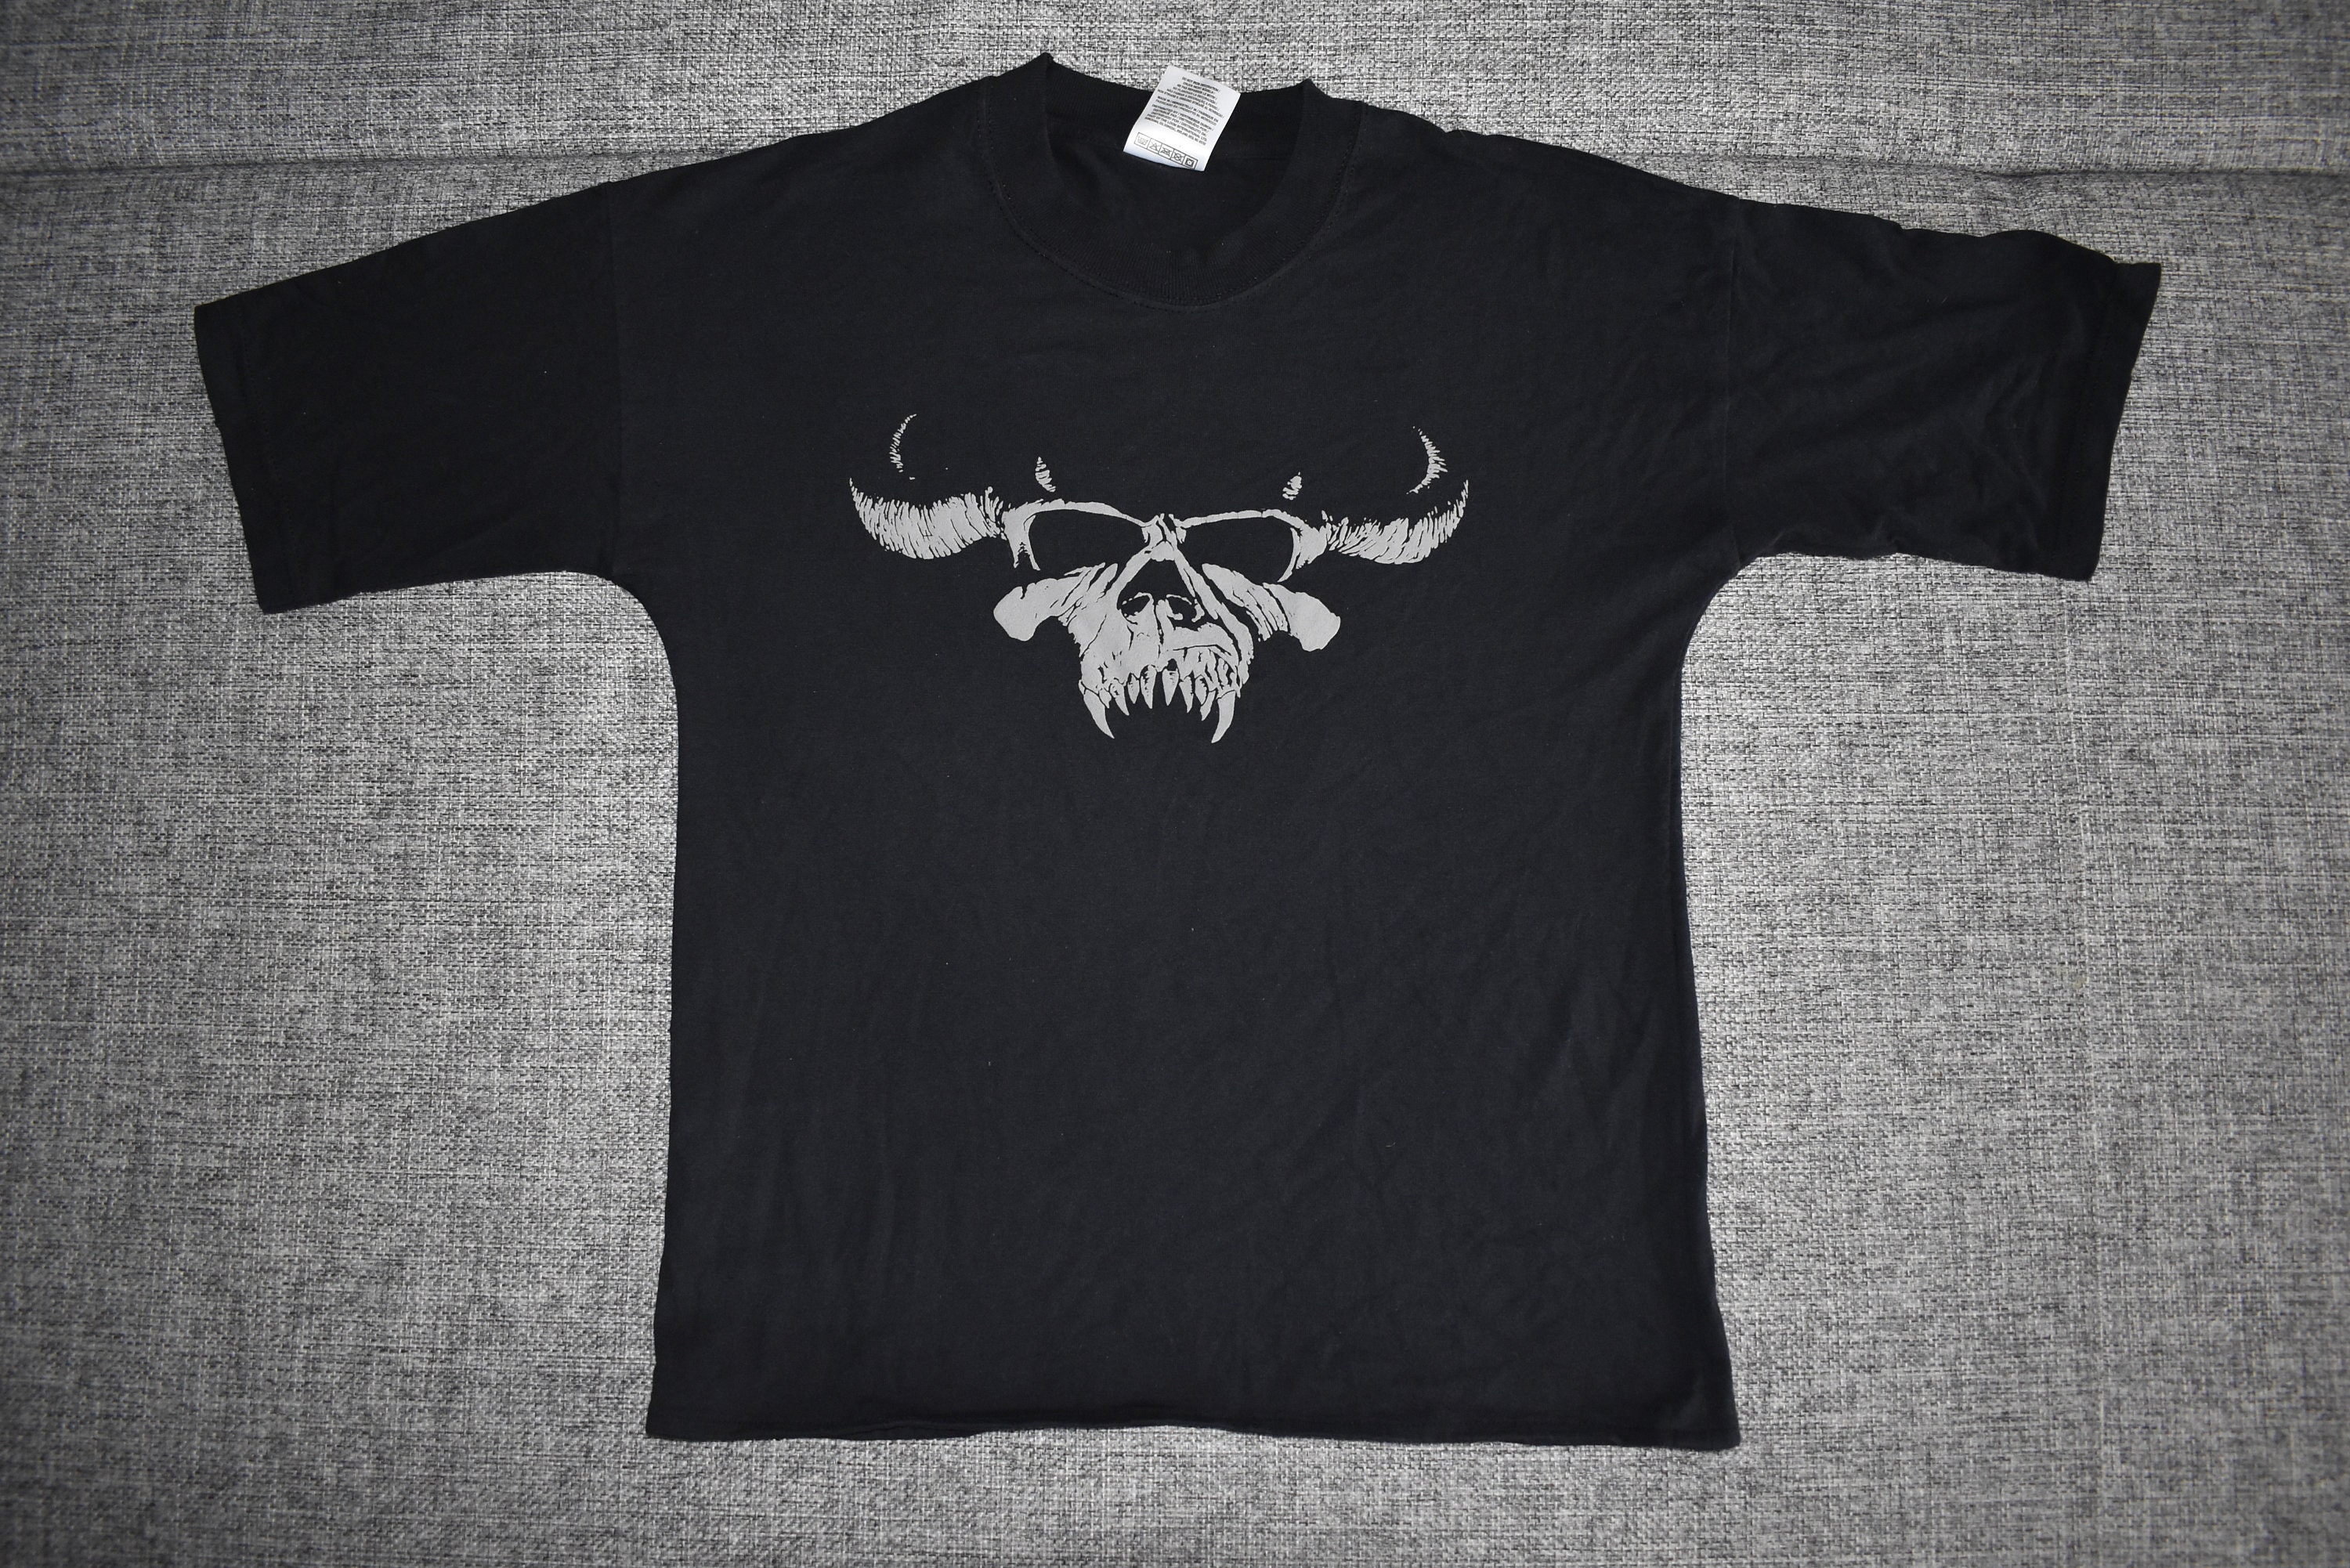 Danzig 666 shirt S 1999 misfits | Etsy